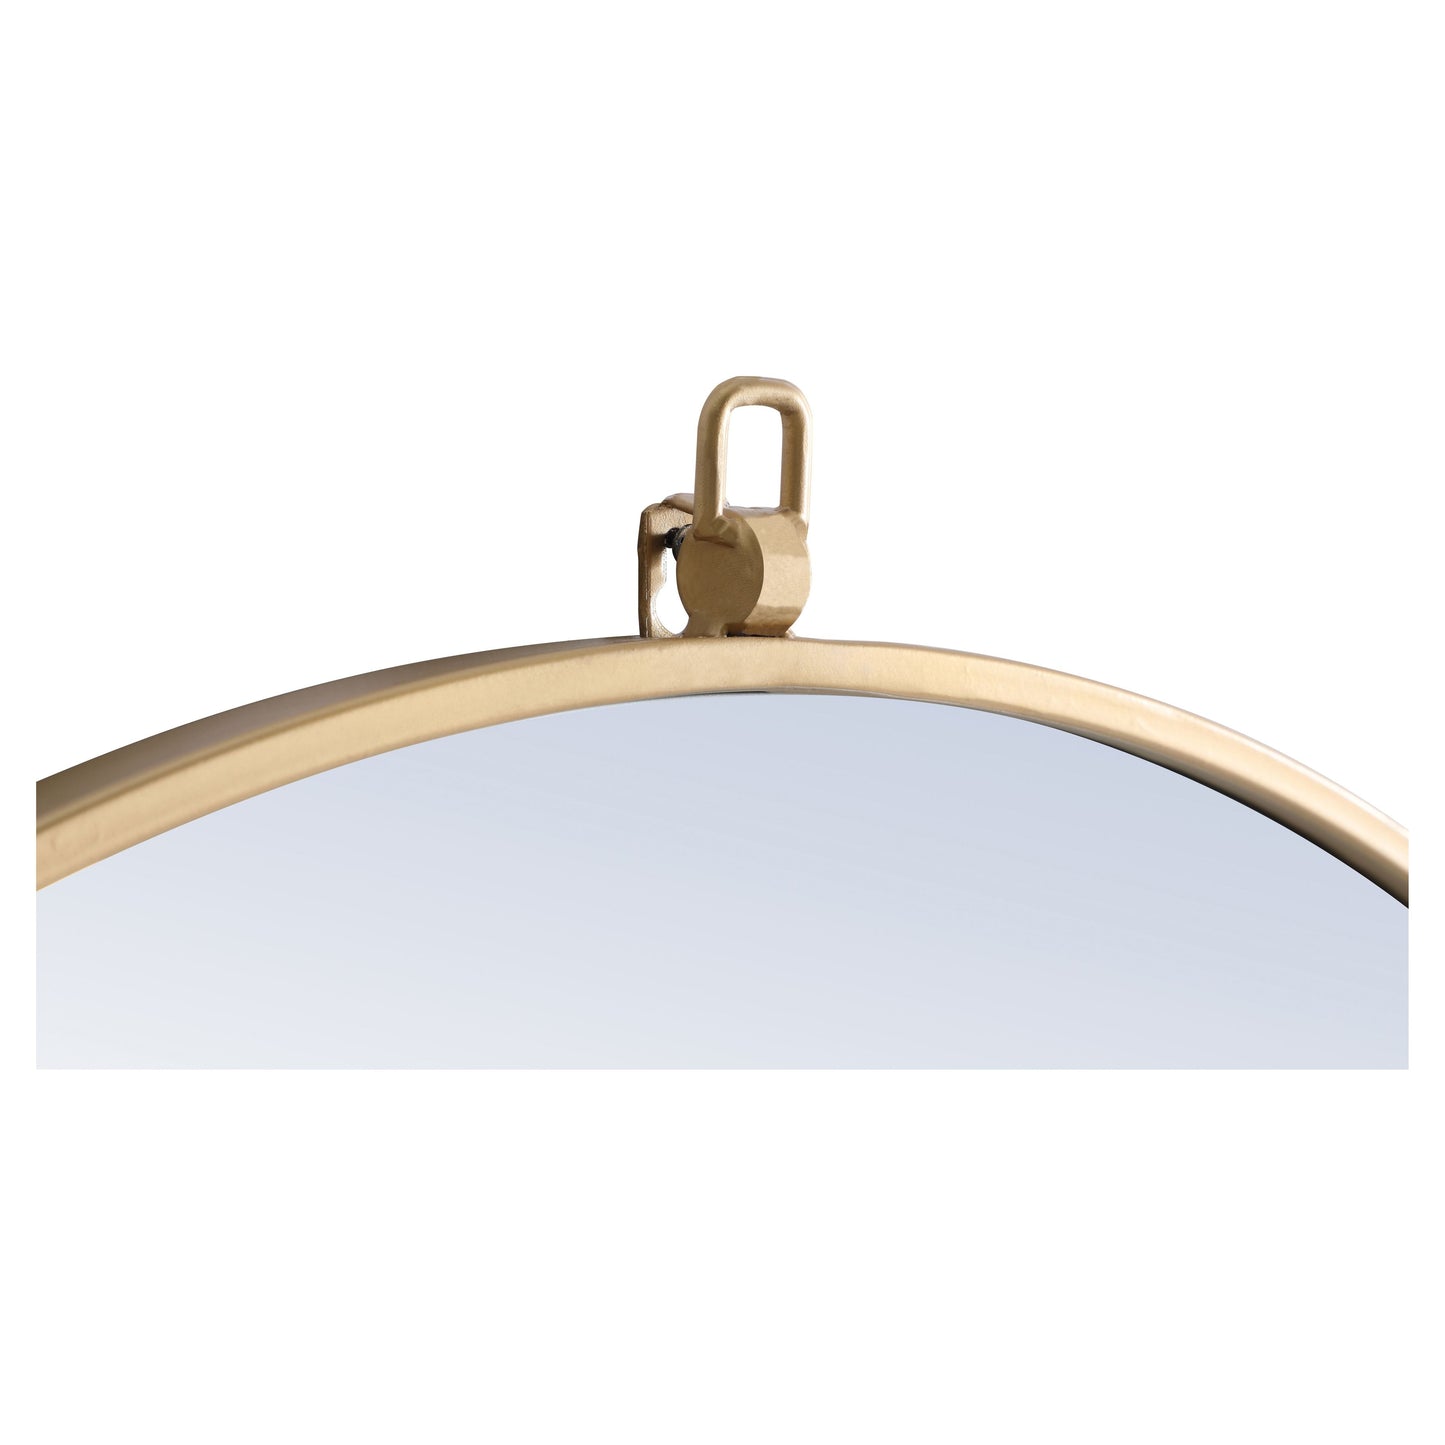 MR4065BR Rowan 42" x 42" Metal Framed Round Mirror with Decorative Hook in Brass